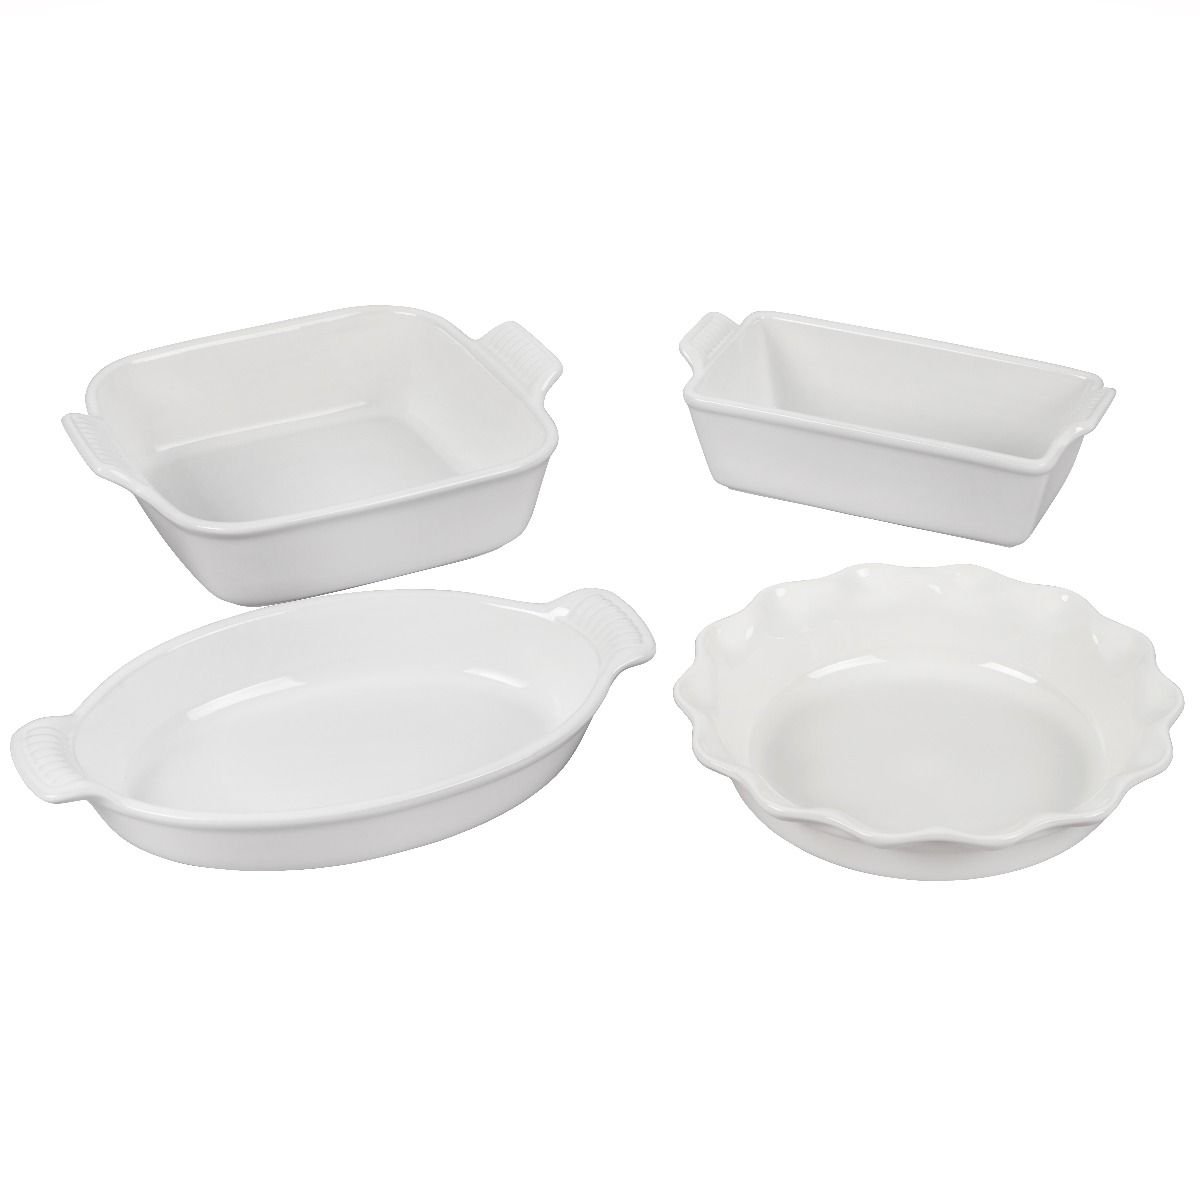 Le Creuset Heritage 4-Piece Stoneware Bakeware Set | White